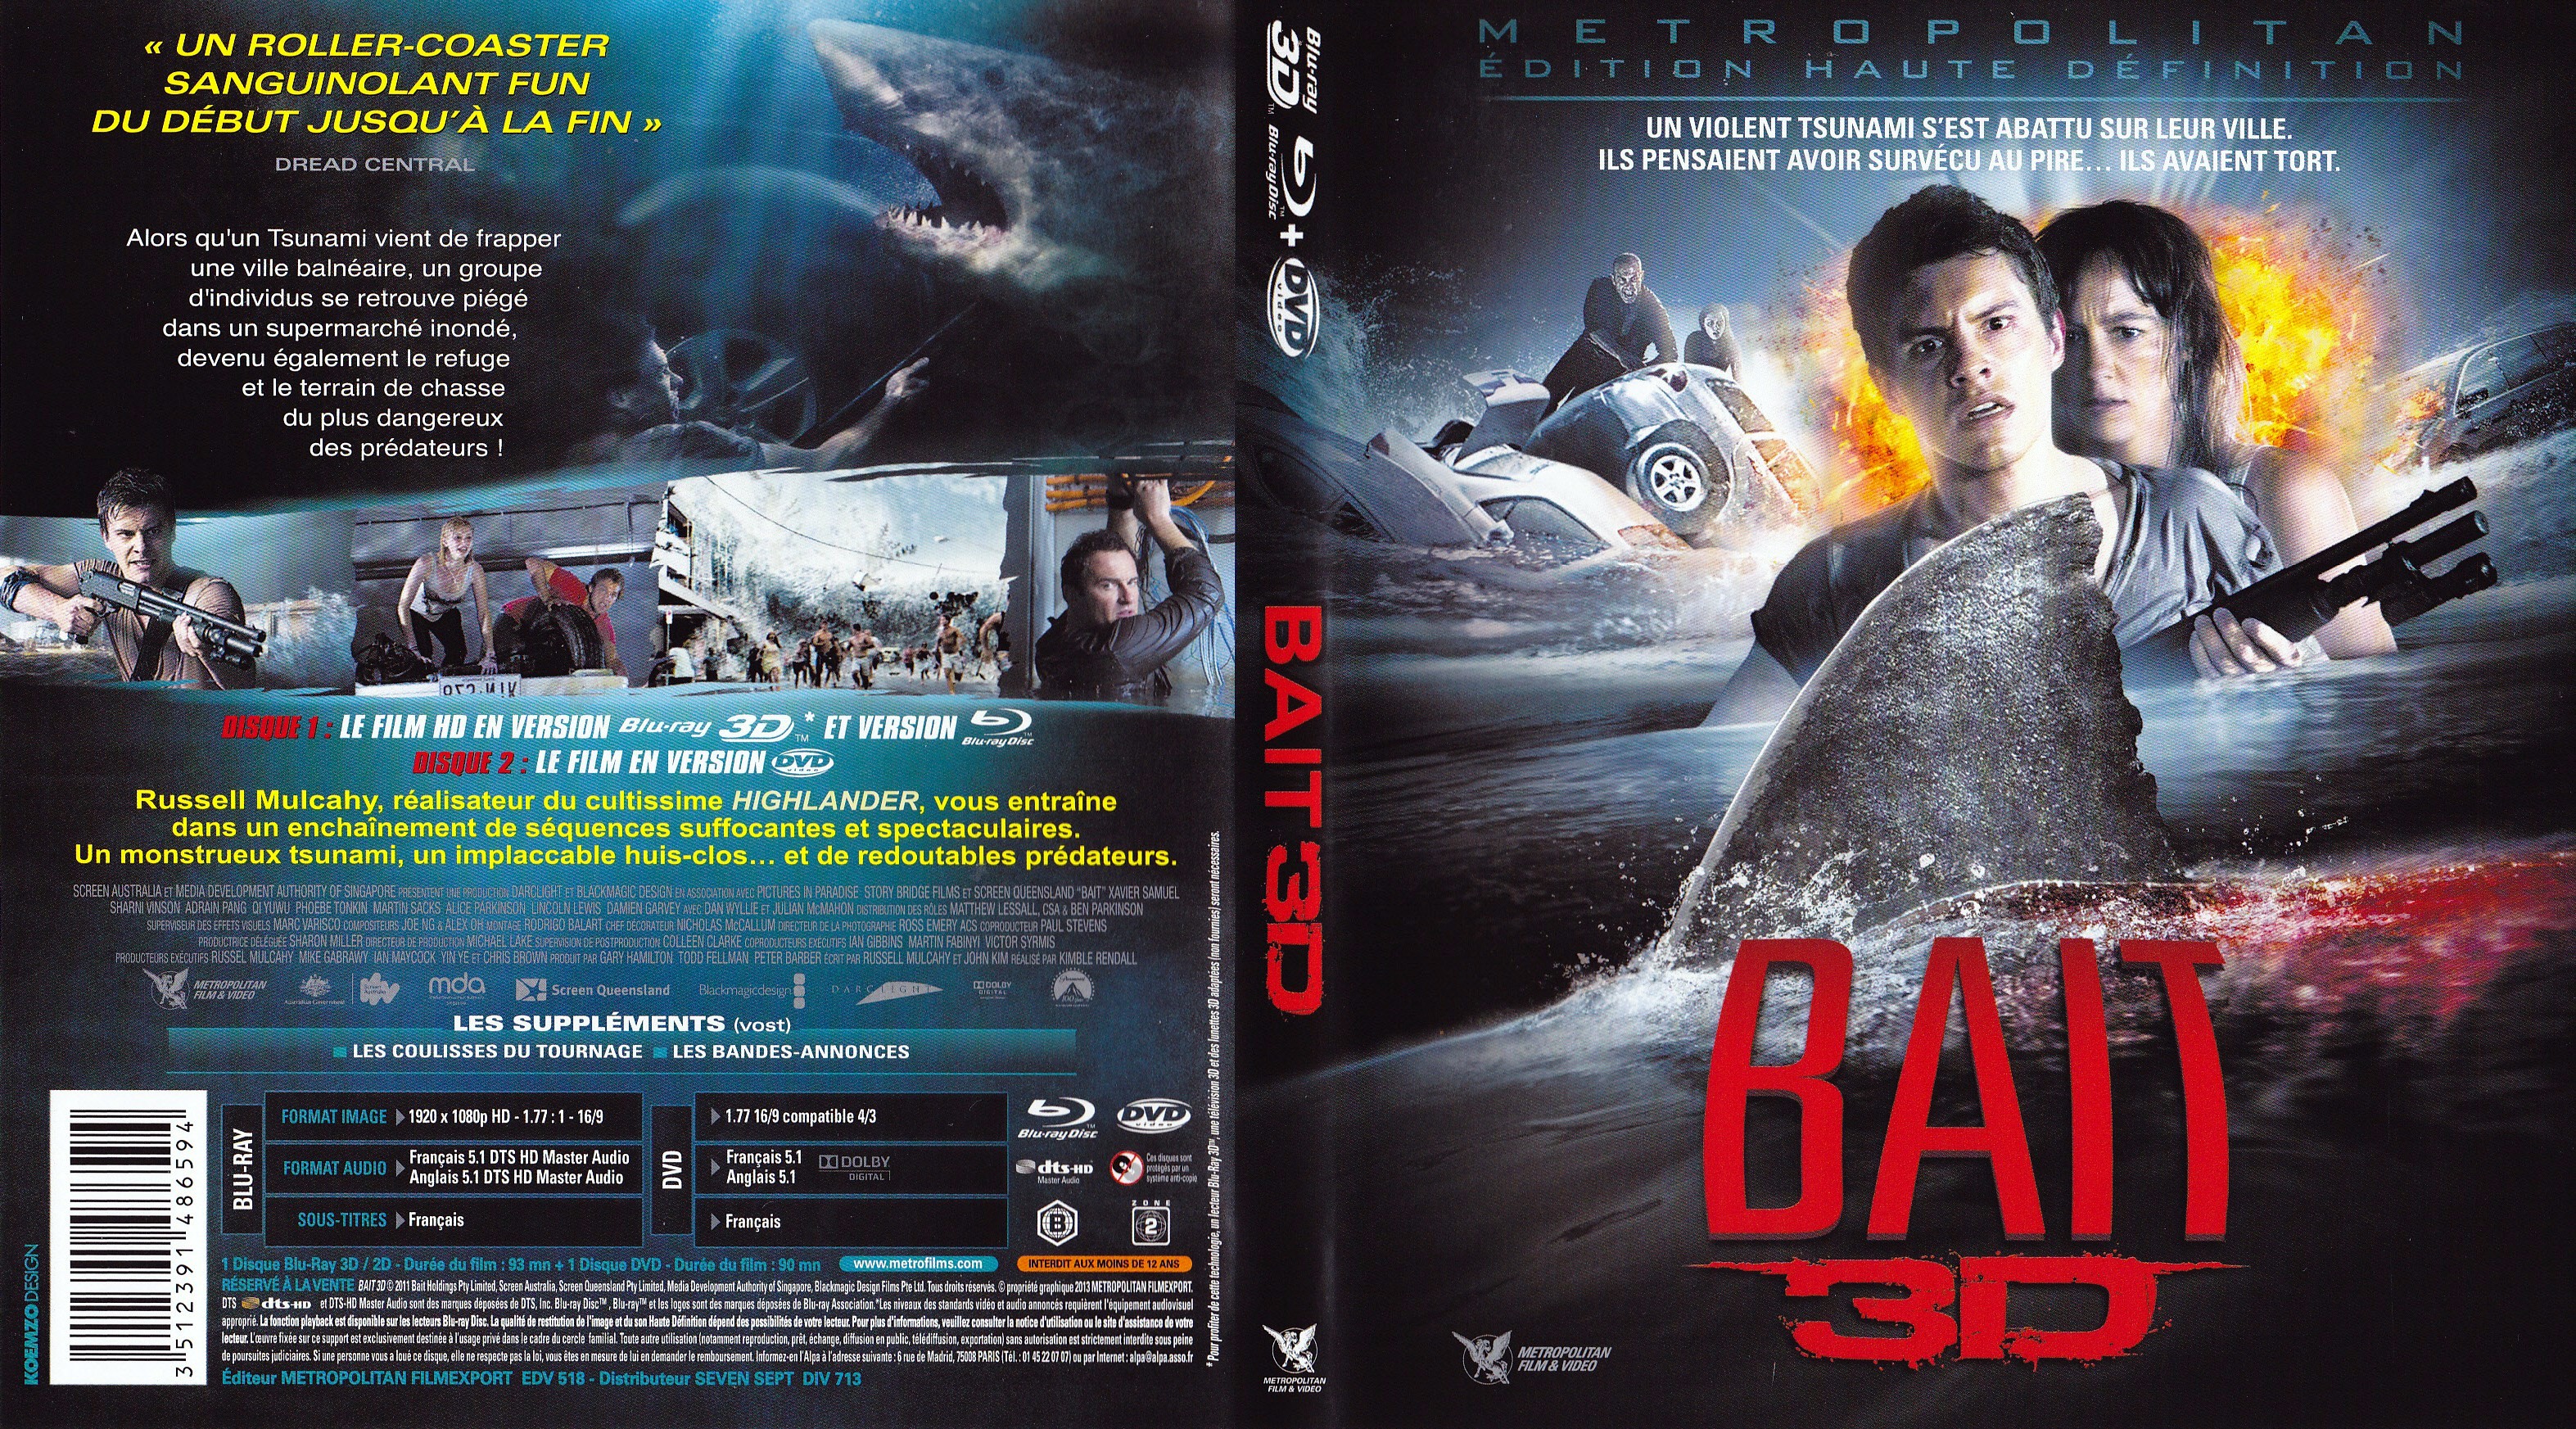 Jaquette DVD Bait 3D (BLU-RAY)